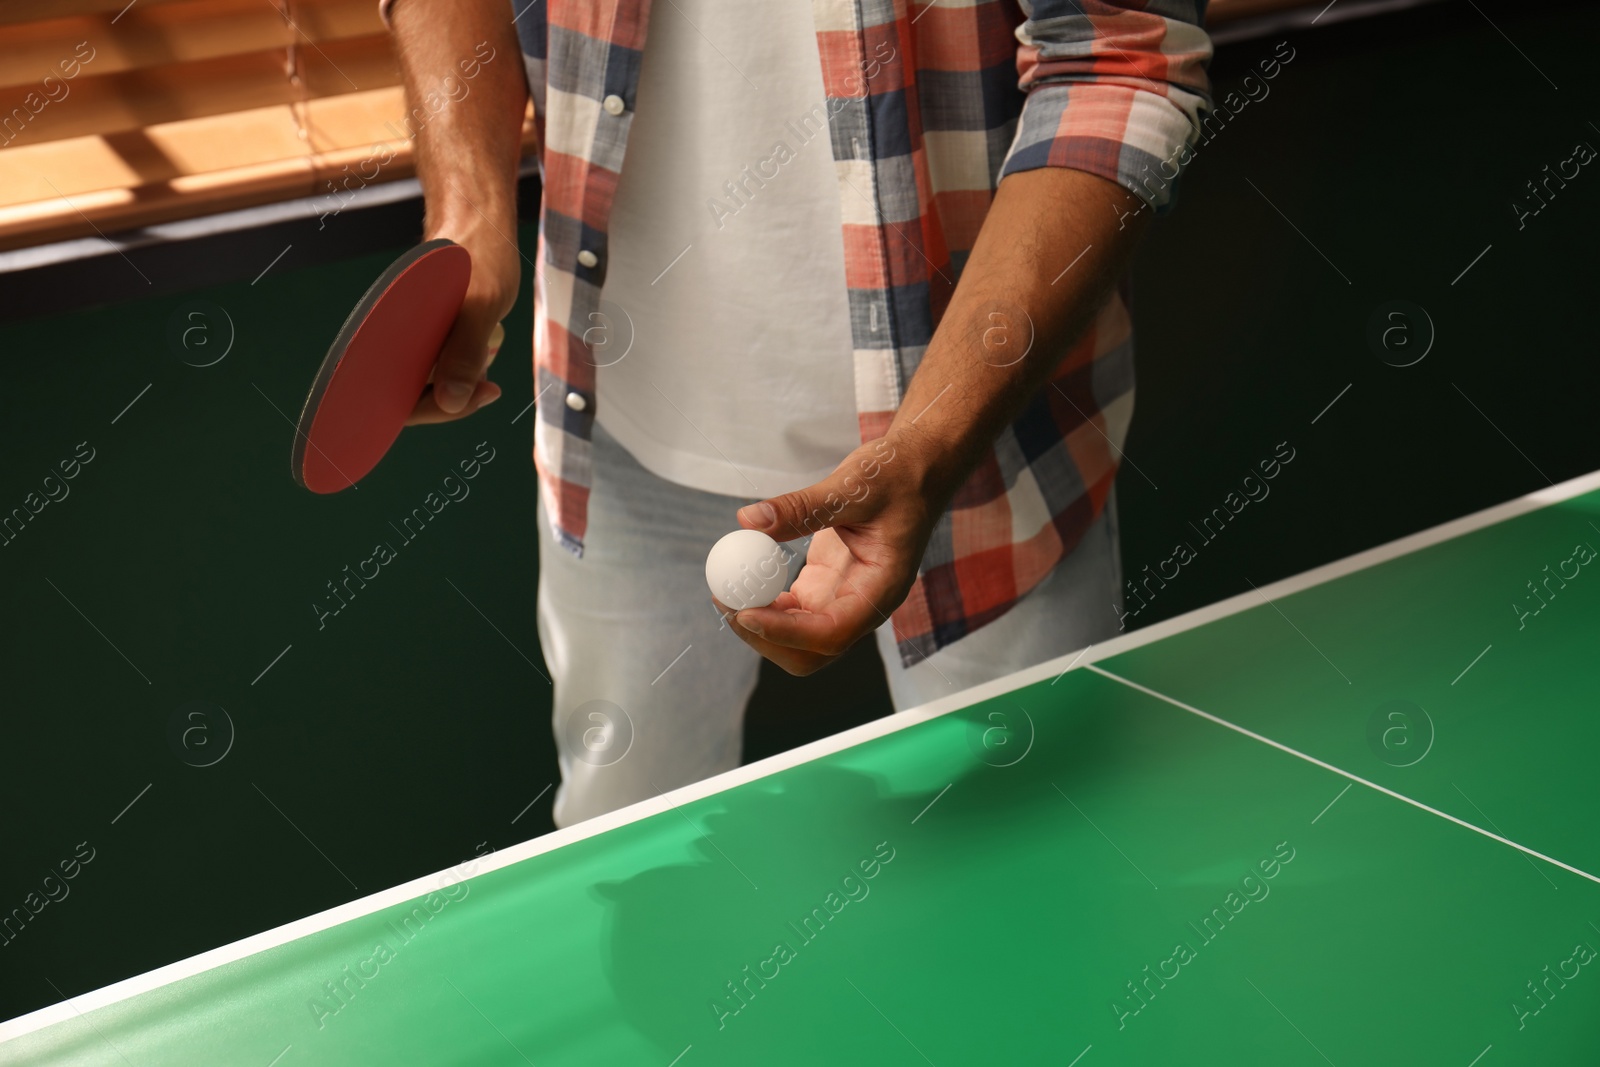 Photo of Man playing ping pong indoors, closeup view